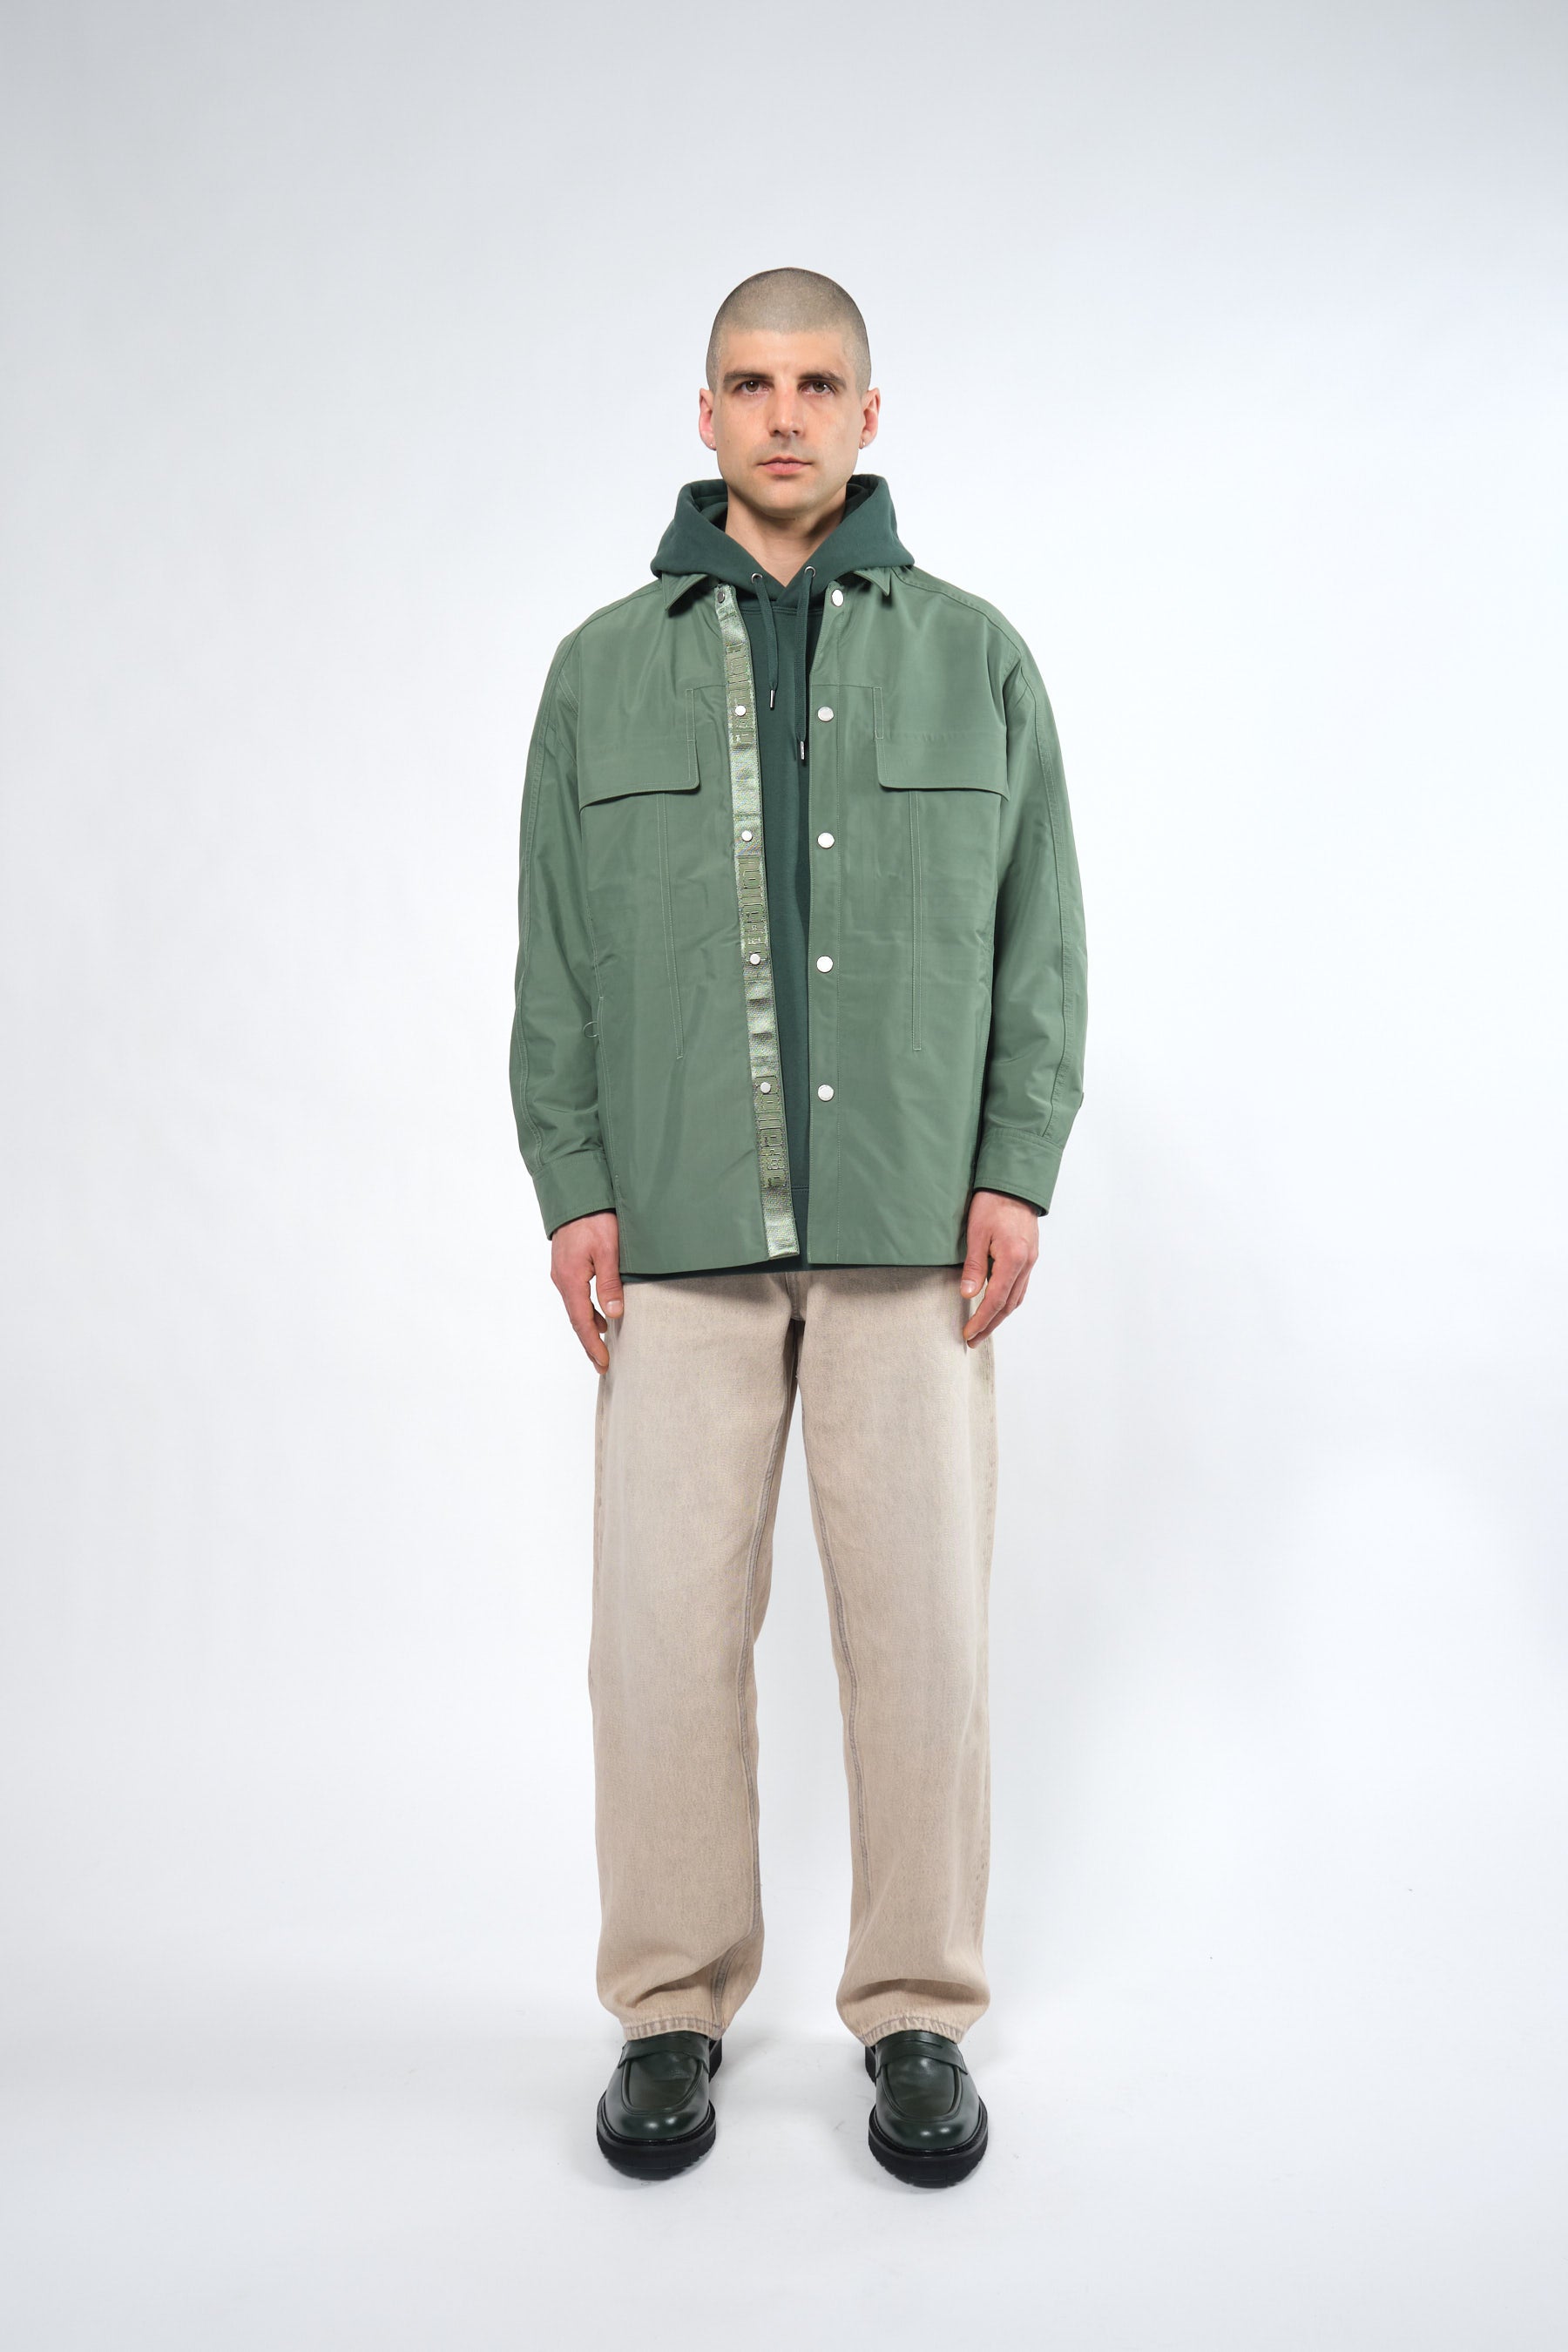  3L Green Waterproof Rain Jacket with Hood - Adhere To  - 3